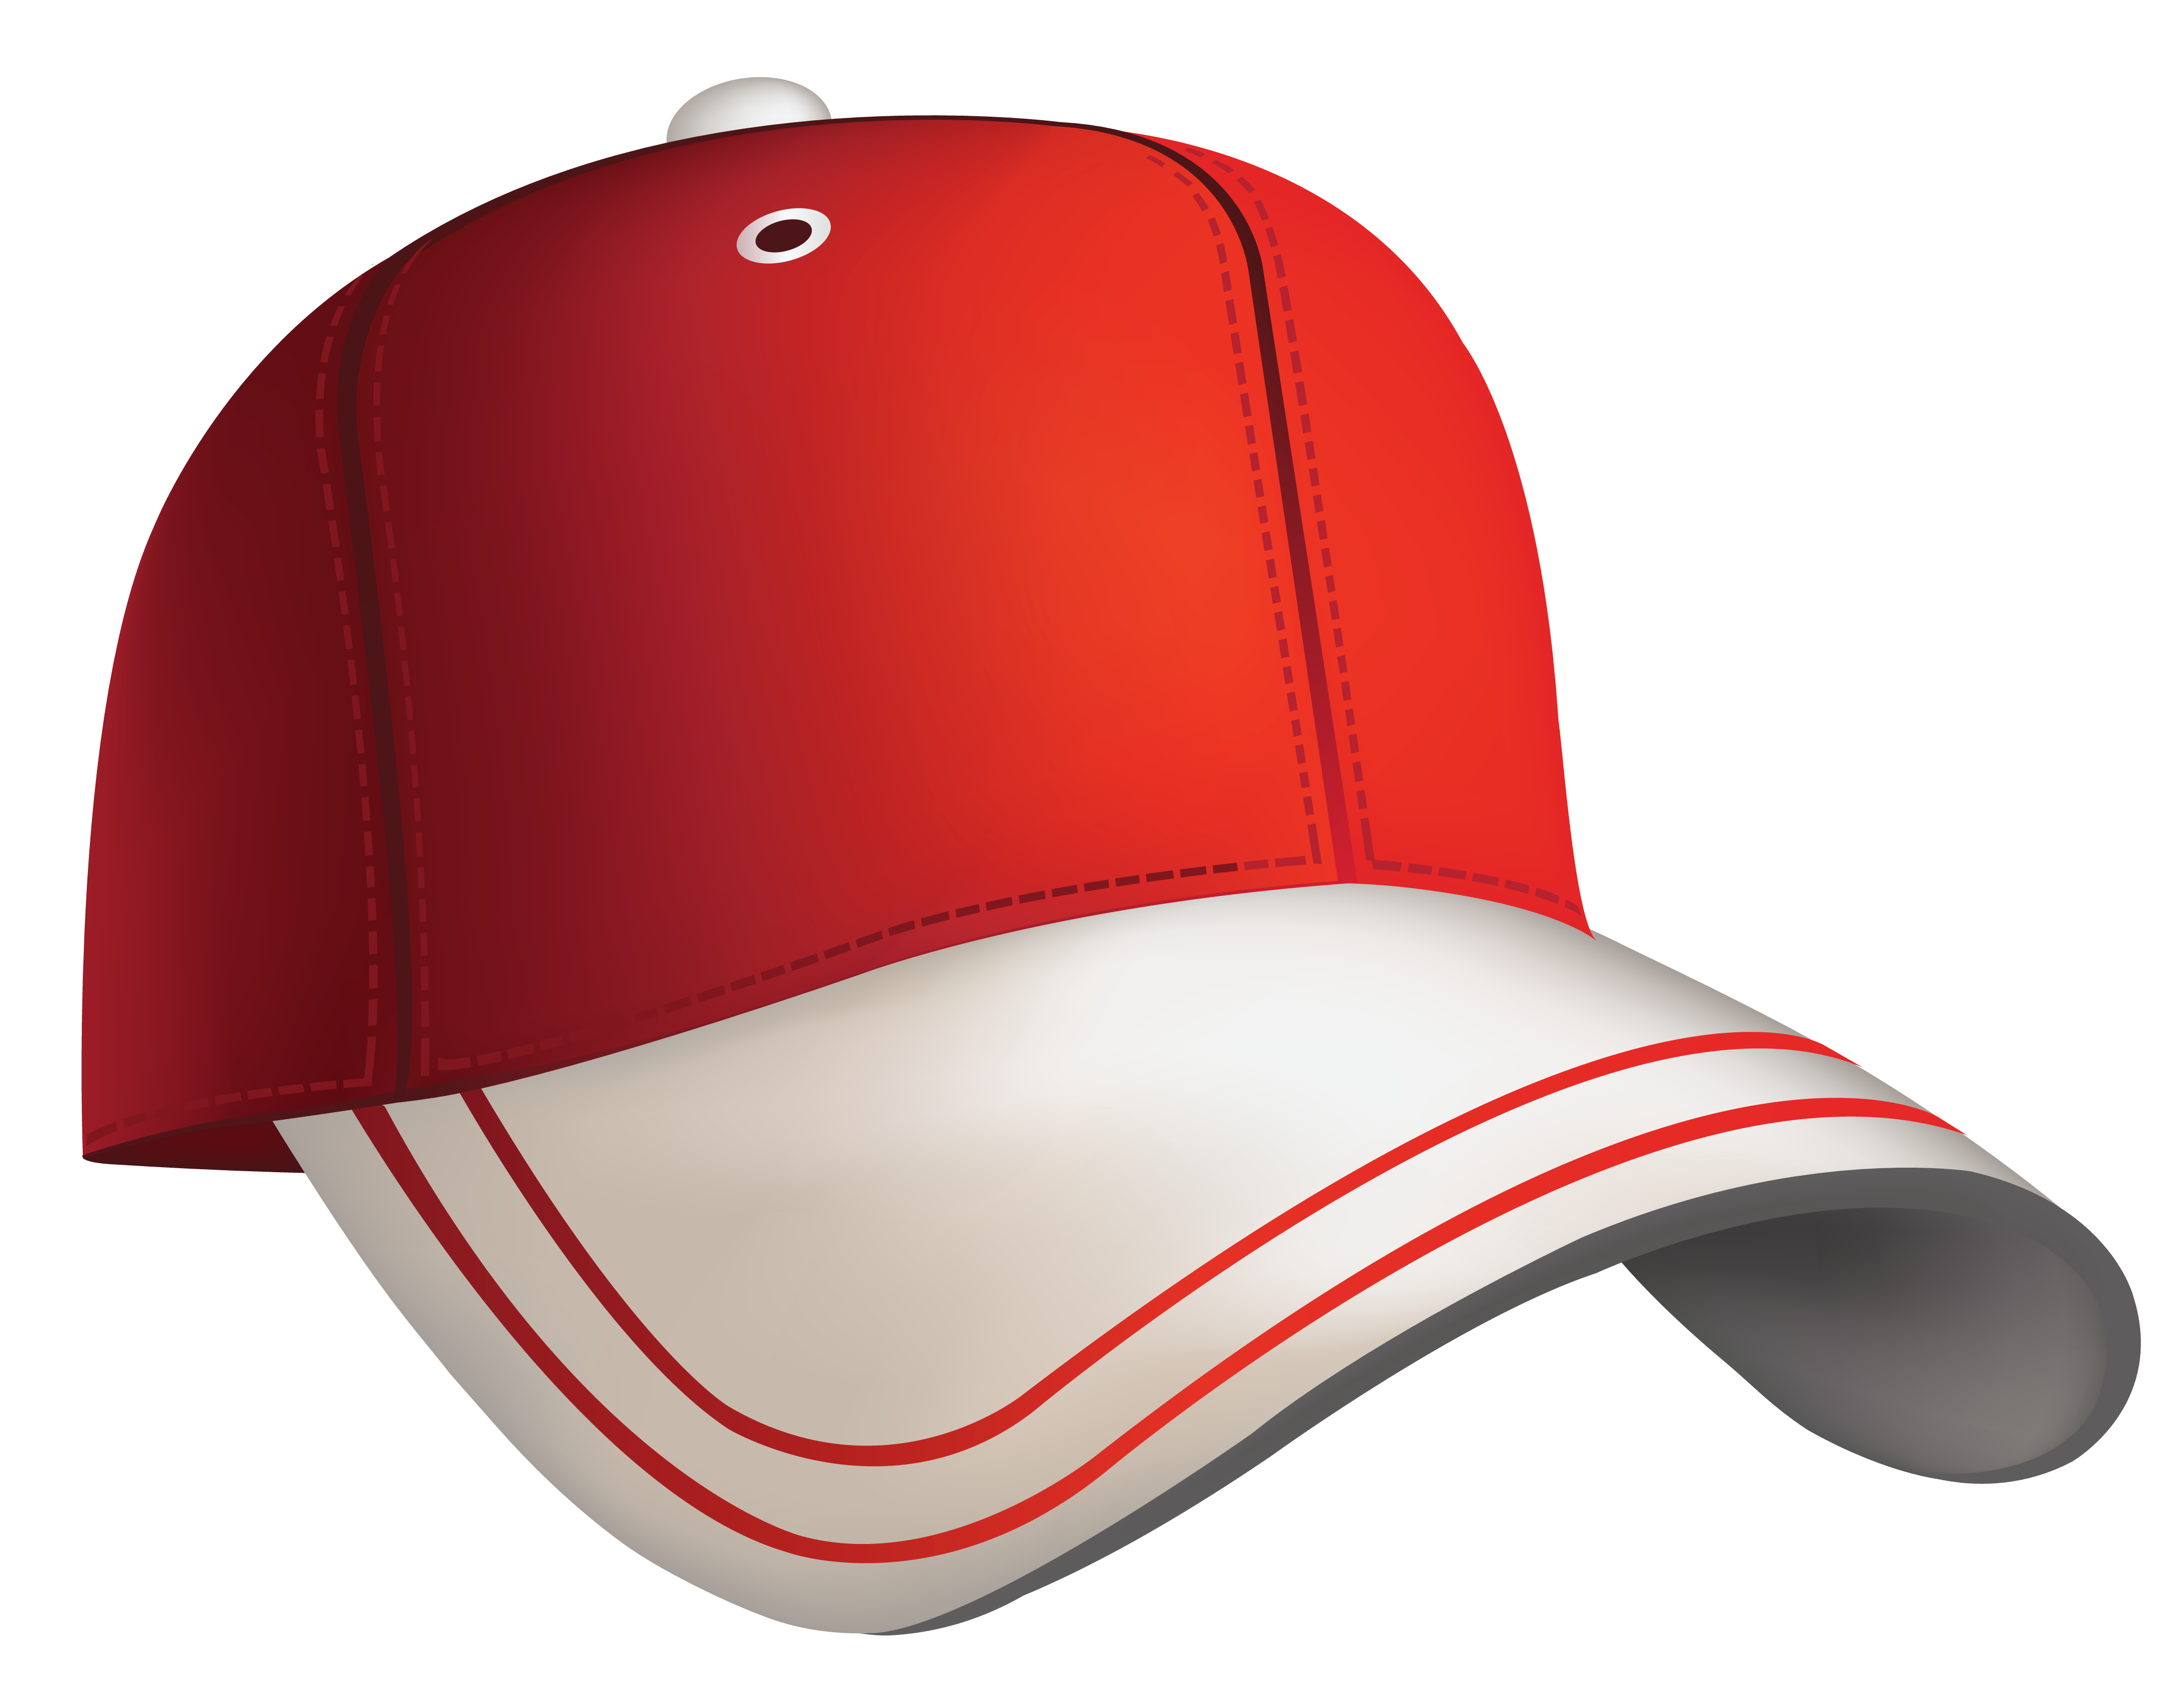 free clipart of baseball caps - photo #9